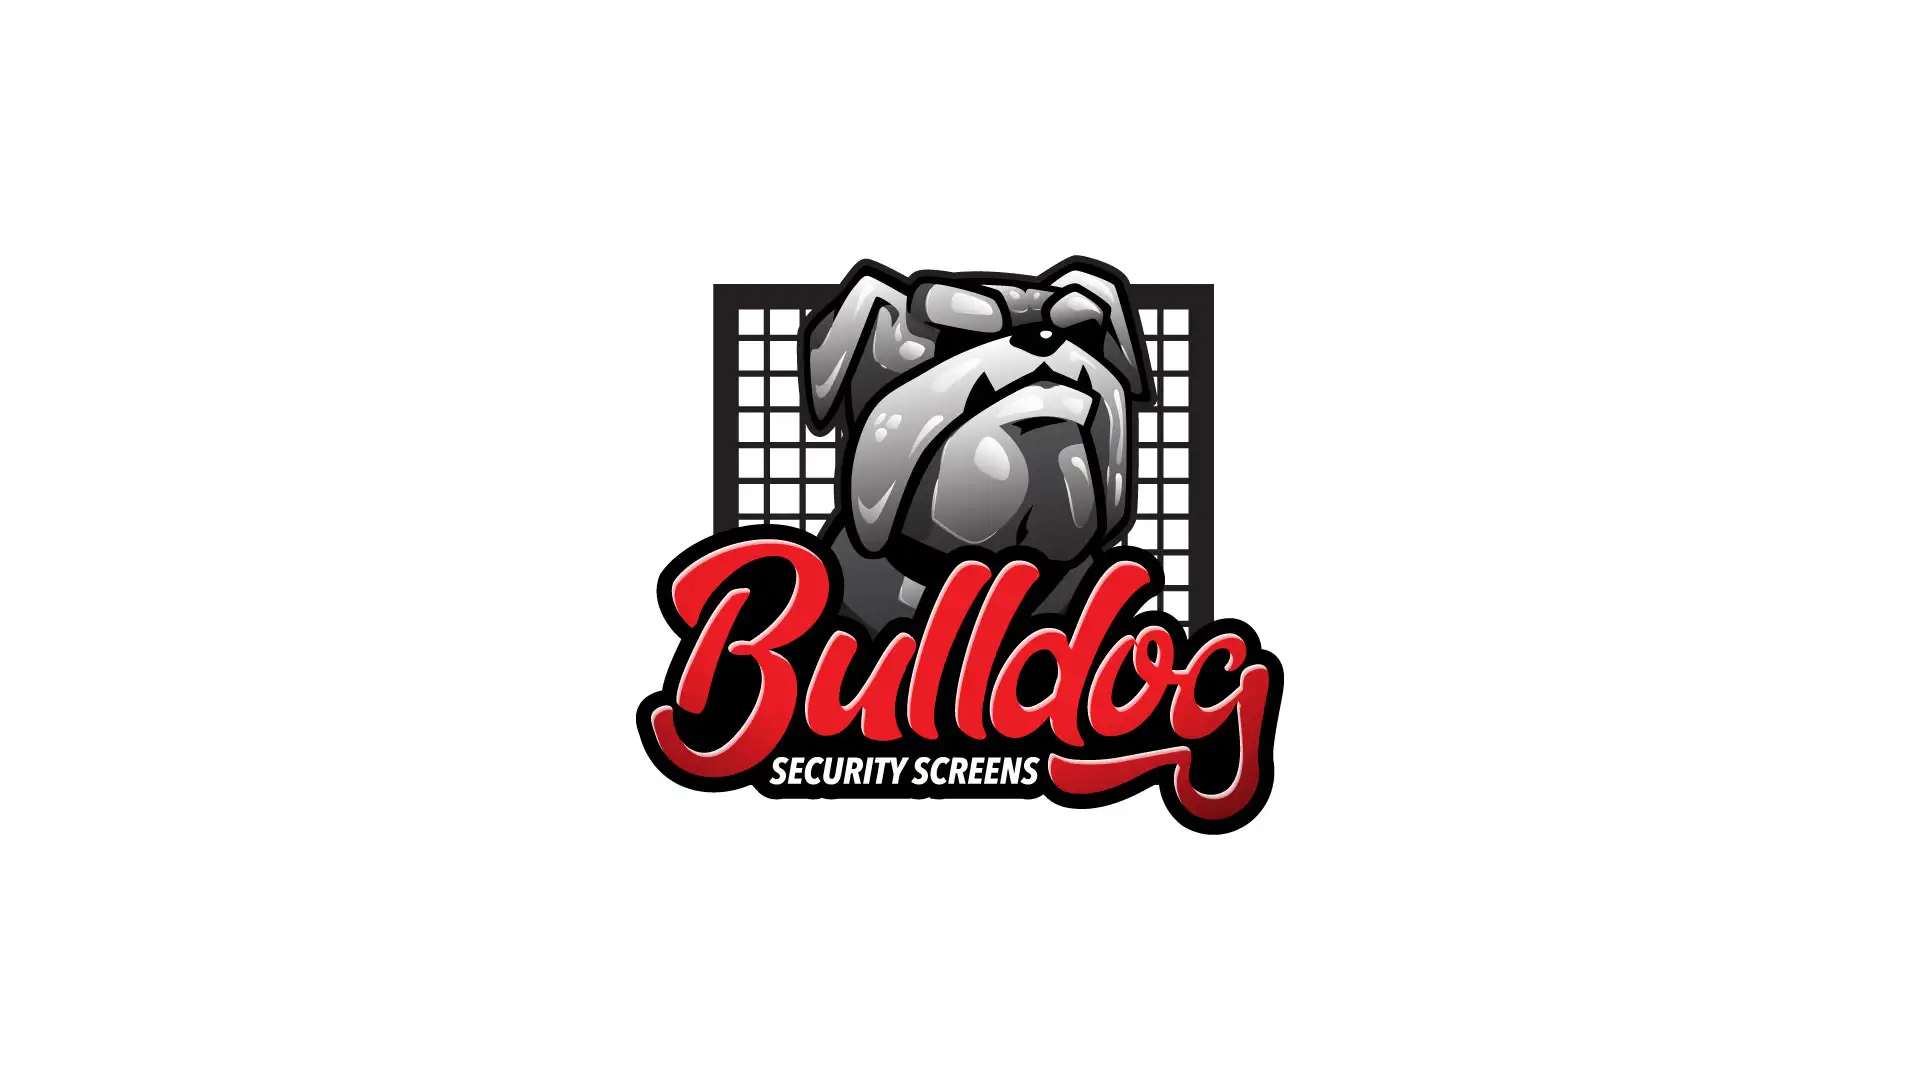 Bulldog Security Screens logo branding design by Dusty Drake